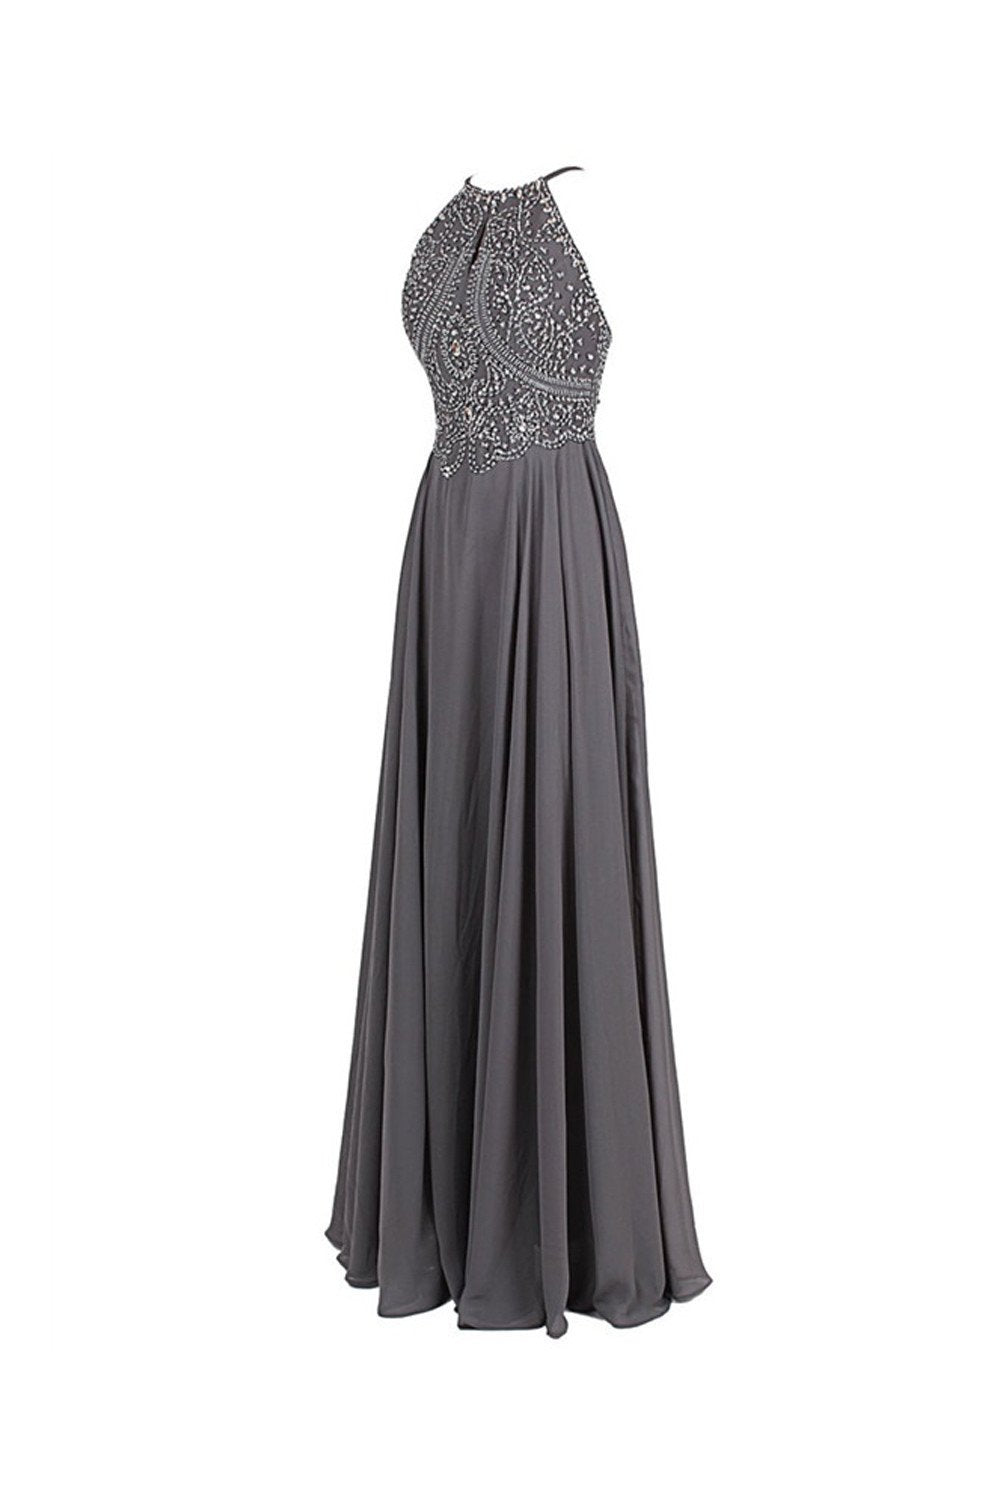 Gray Chiffon Backless Cheap Long Evening Prom Dress ED0651